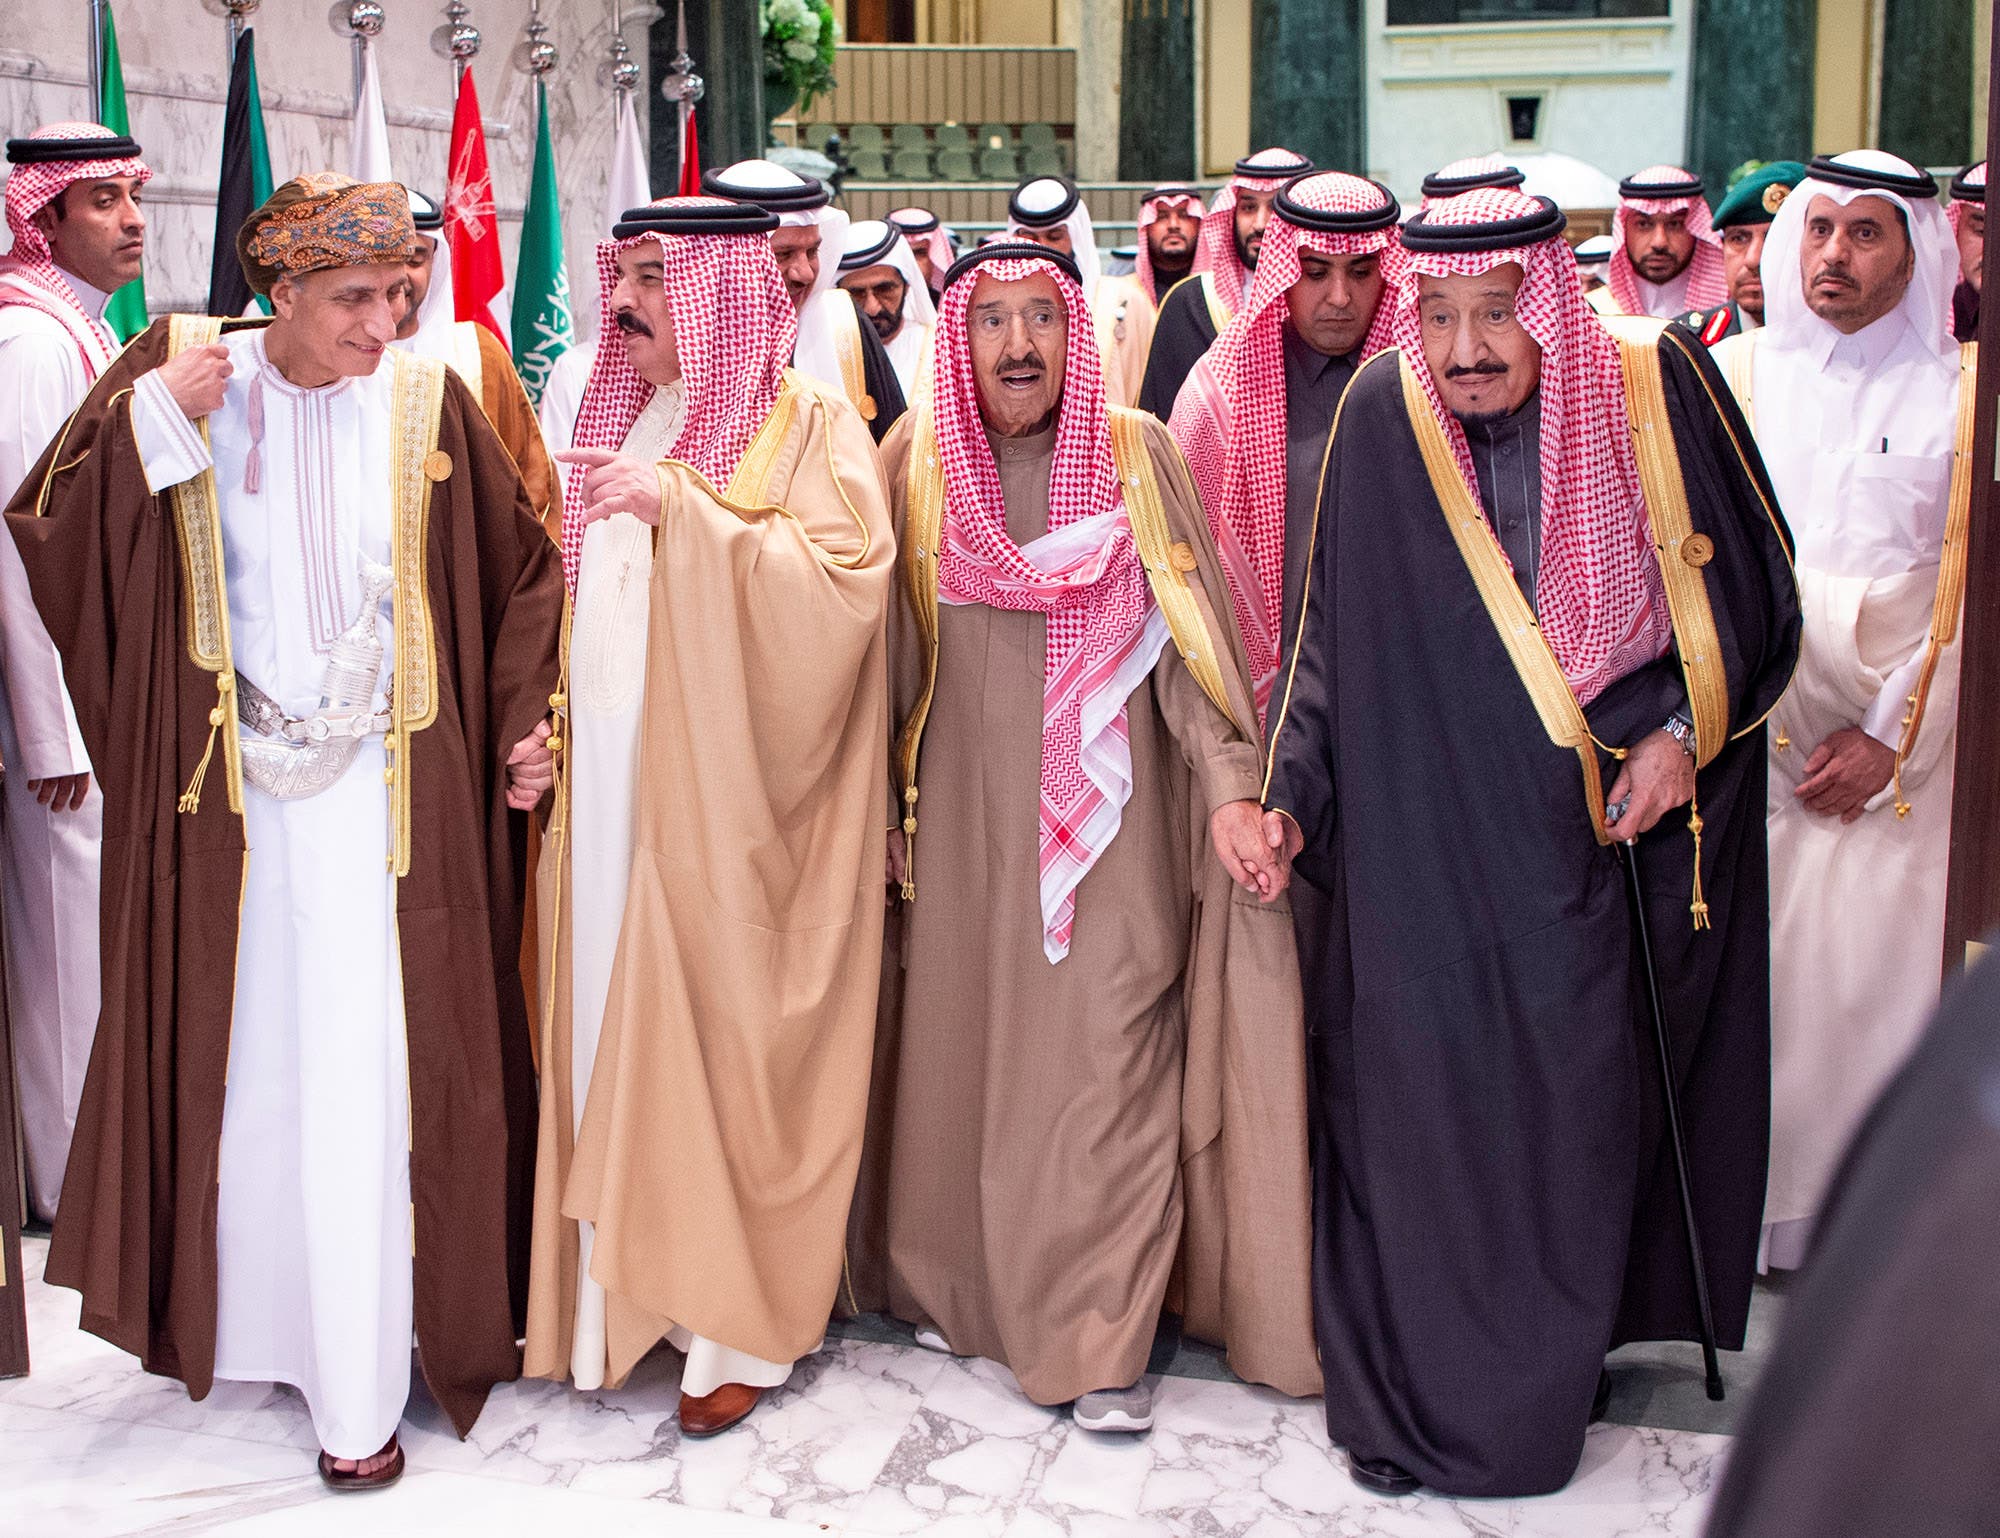 Saudi Arabia's King Salman bin Abdulaziz Al Saud walks with Kuwaiti Emir Sheikh Sabah al-Ahmad al-Jaber al-Sabah and GCC leaders during the Gulf Cooperation Council's (GCC) 40th Summit in Riyadh. (Reuters)